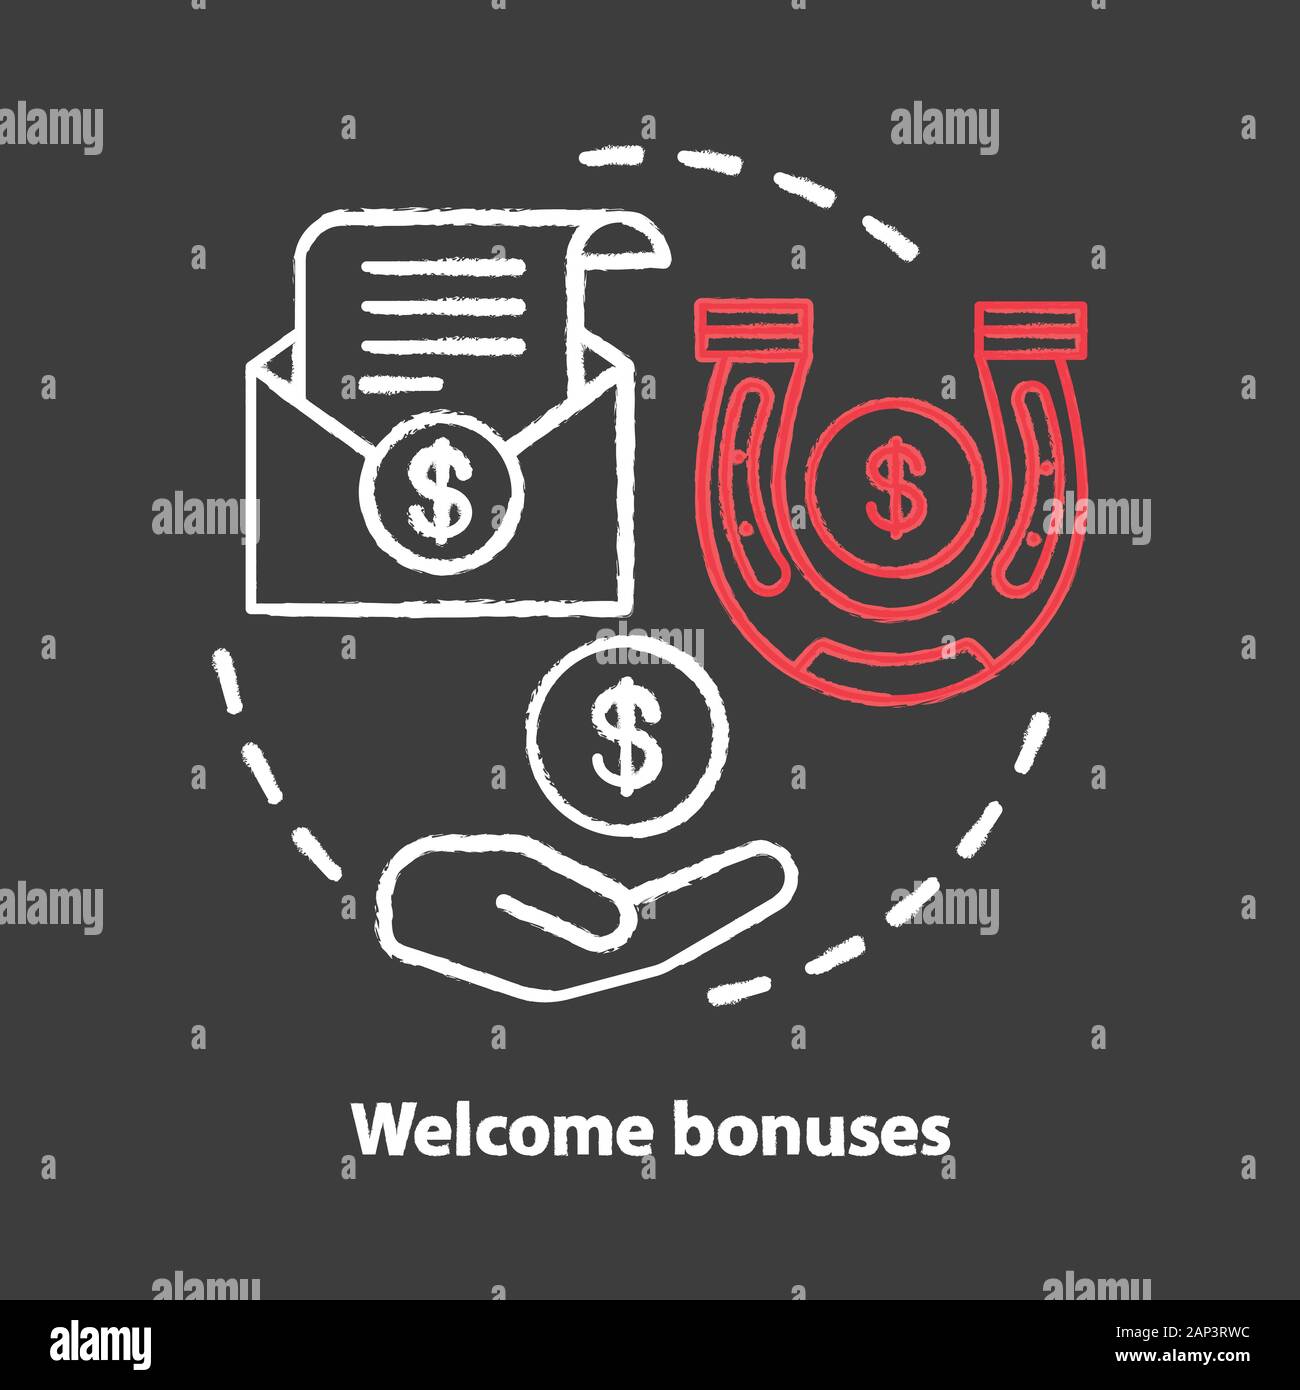 Casino welcome bonuses chalk concept icon. Reward program idea. Good luck & fortune. Financial success. Profit, income. Vector isolated chalkboard ill Stock Vector